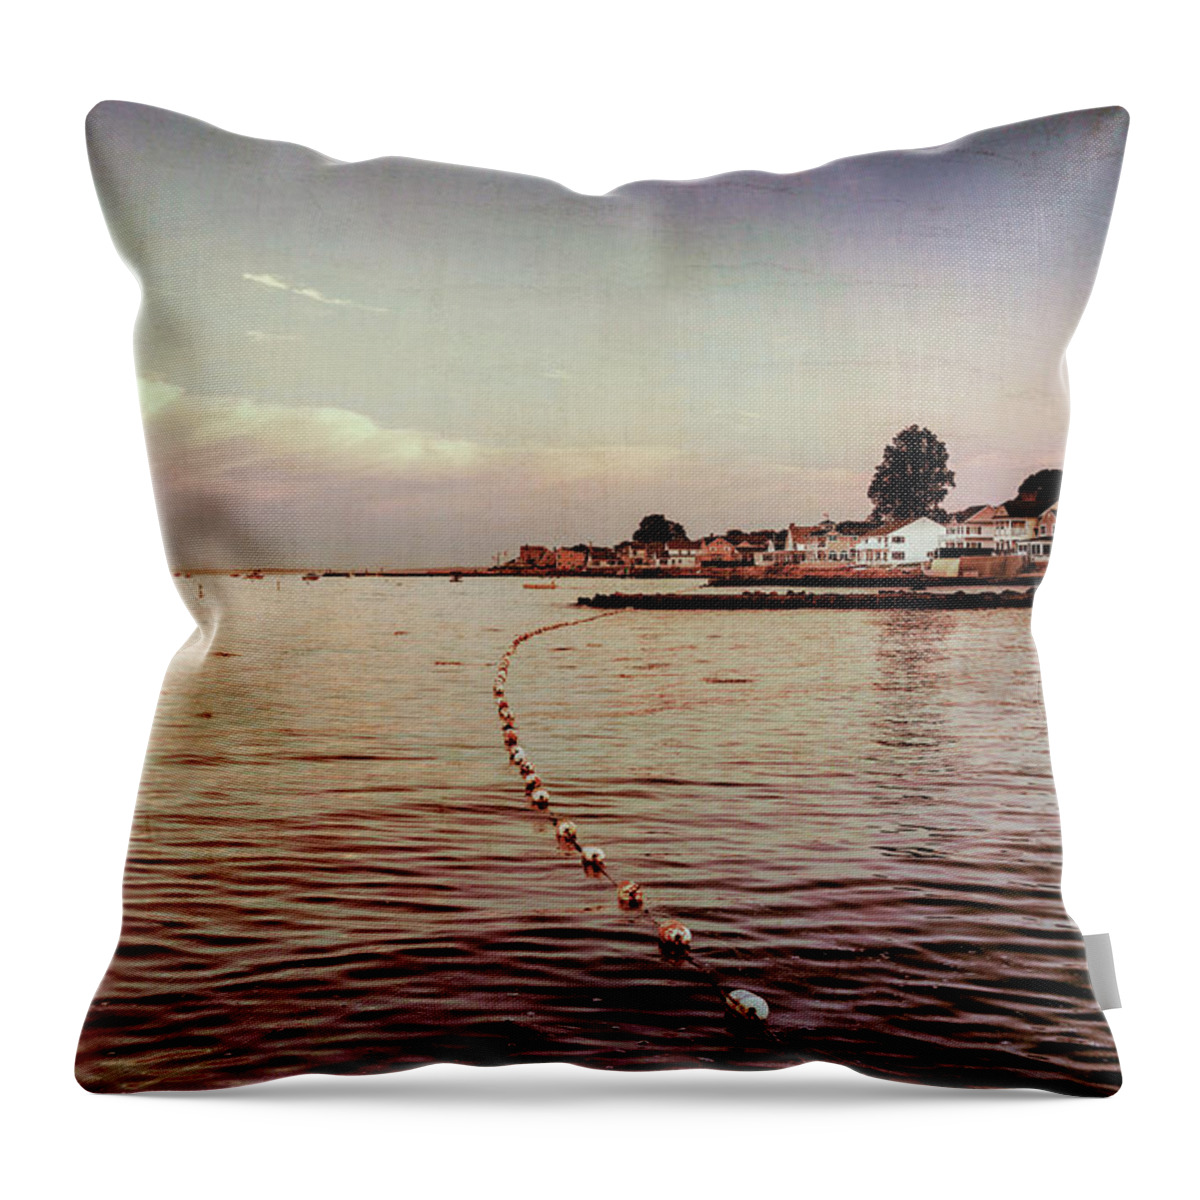 Beach Throw Pillow featuring the photograph Vintage Blue Beach by Marianne Campolongo